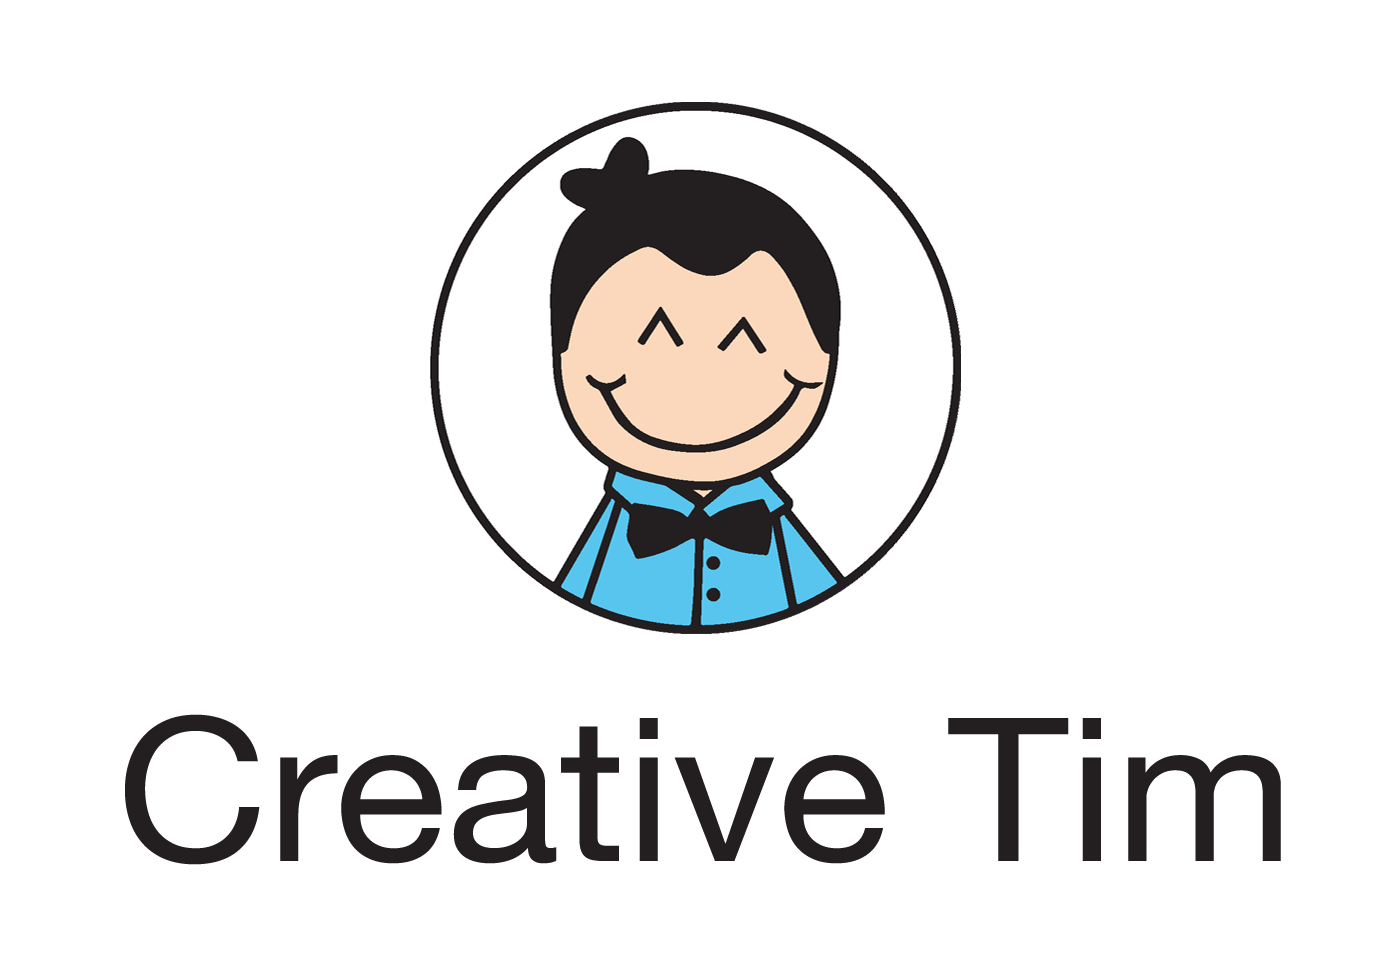 Welcome to Creative Tim New Logo